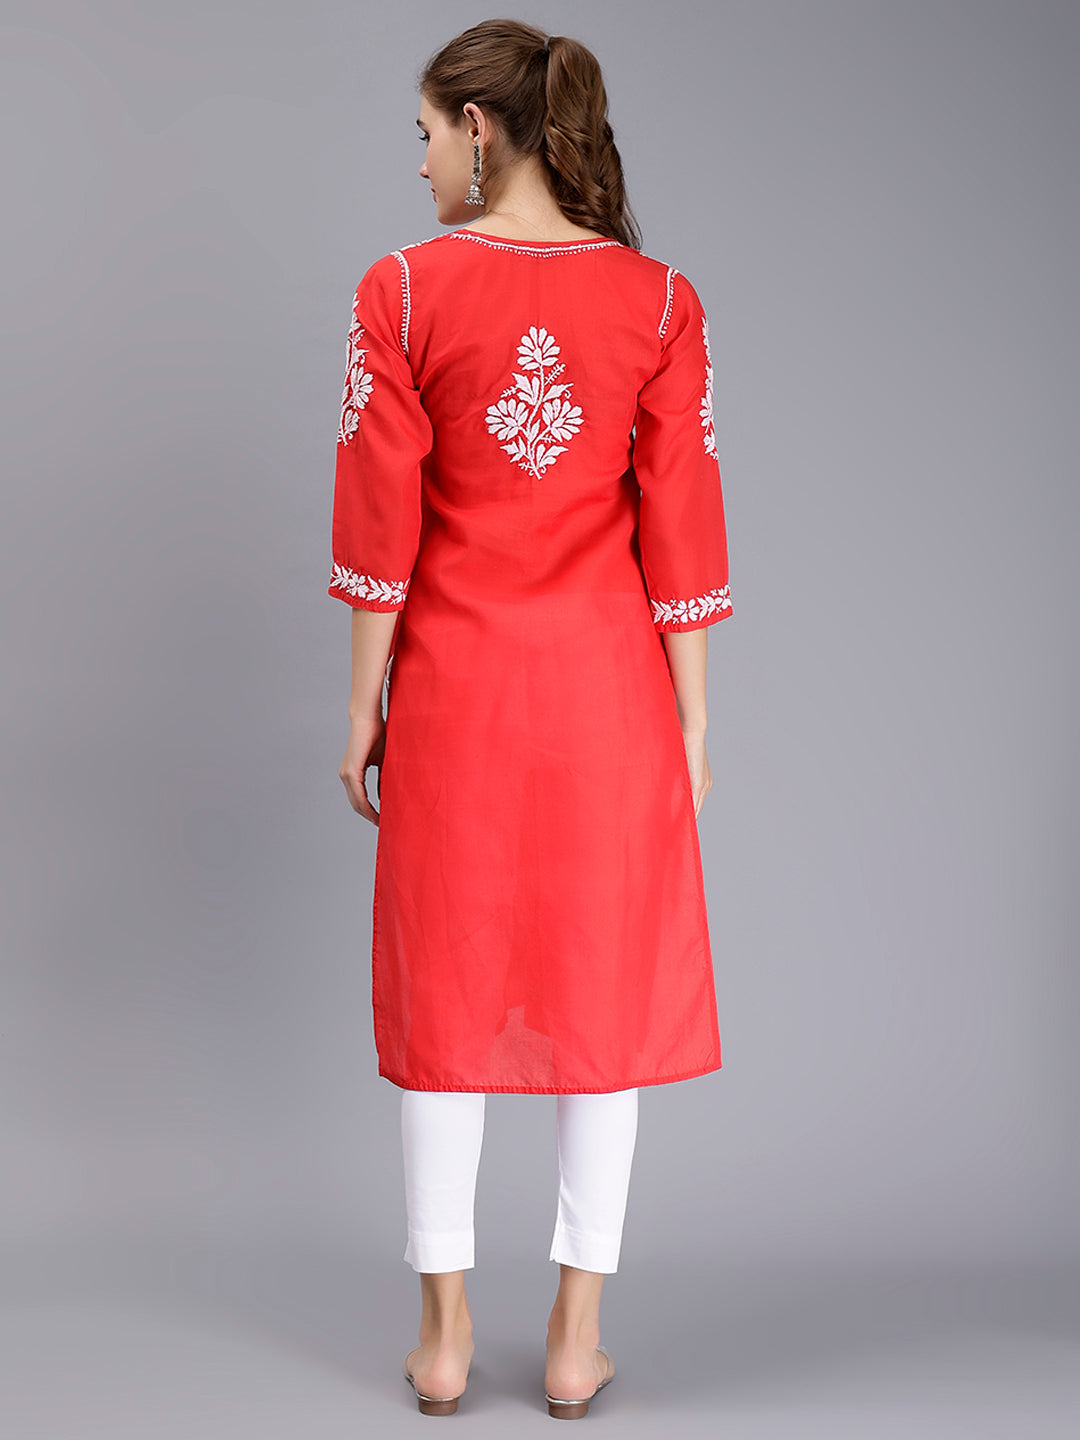 Red Terivoil Cotton Lucknowi Chikankari Embroidered Kurti